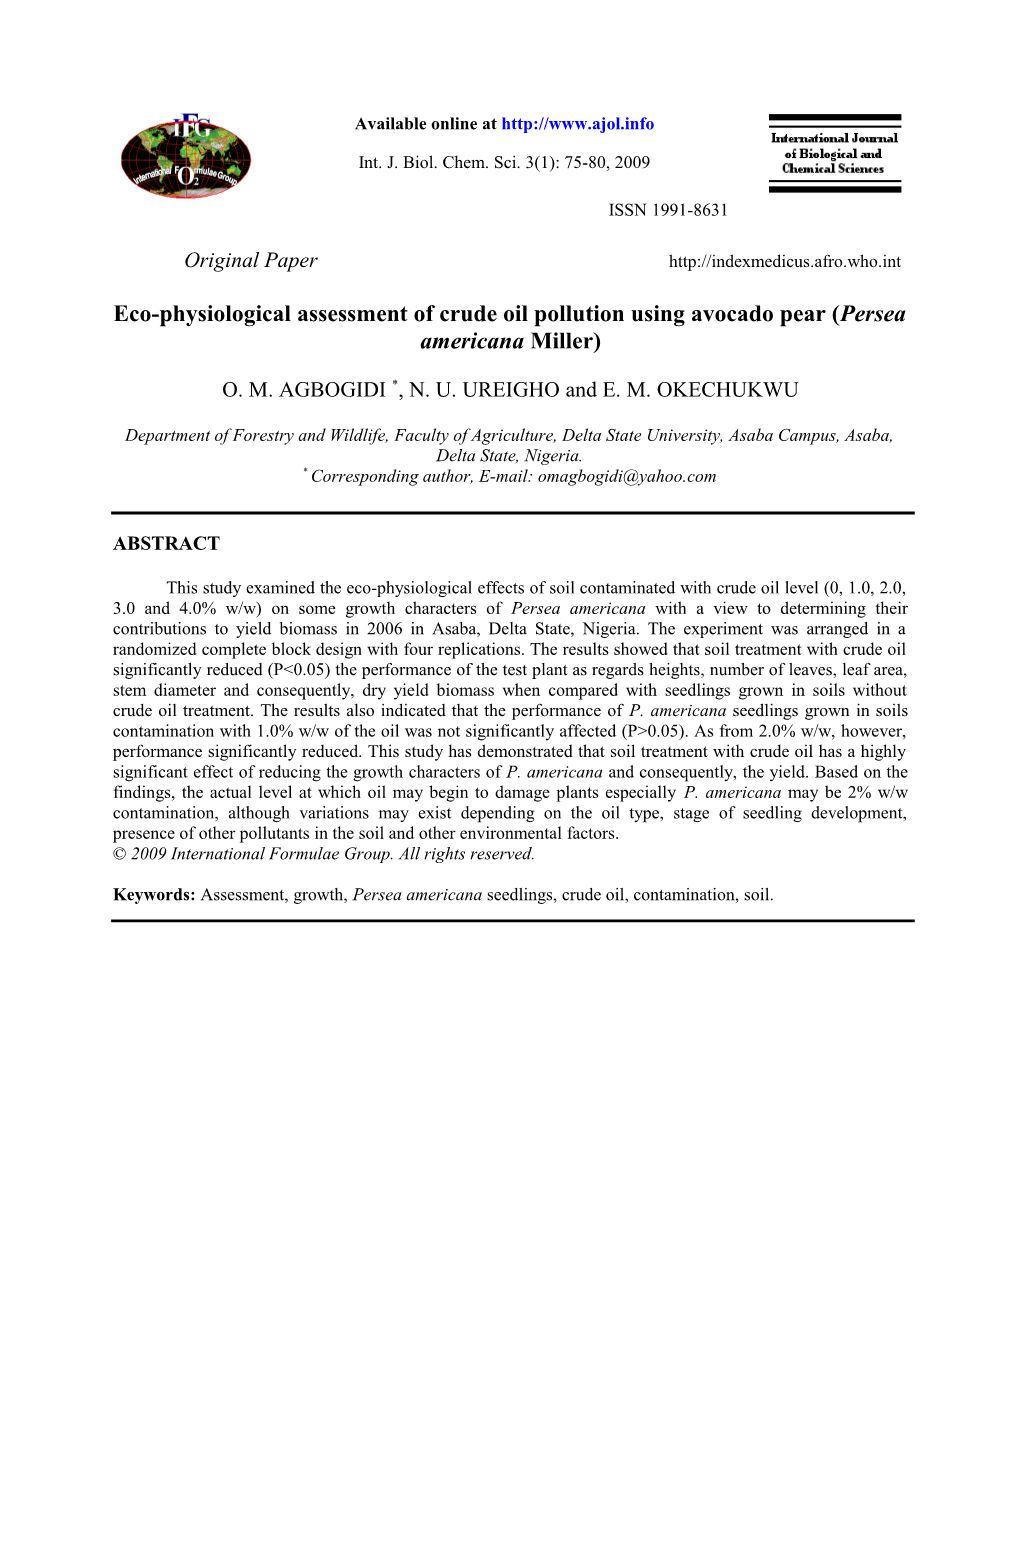 O. M. Agbogidi Et Al. / Int. J. Biol. Chem. Sci. 3(1): 75-80, 2009